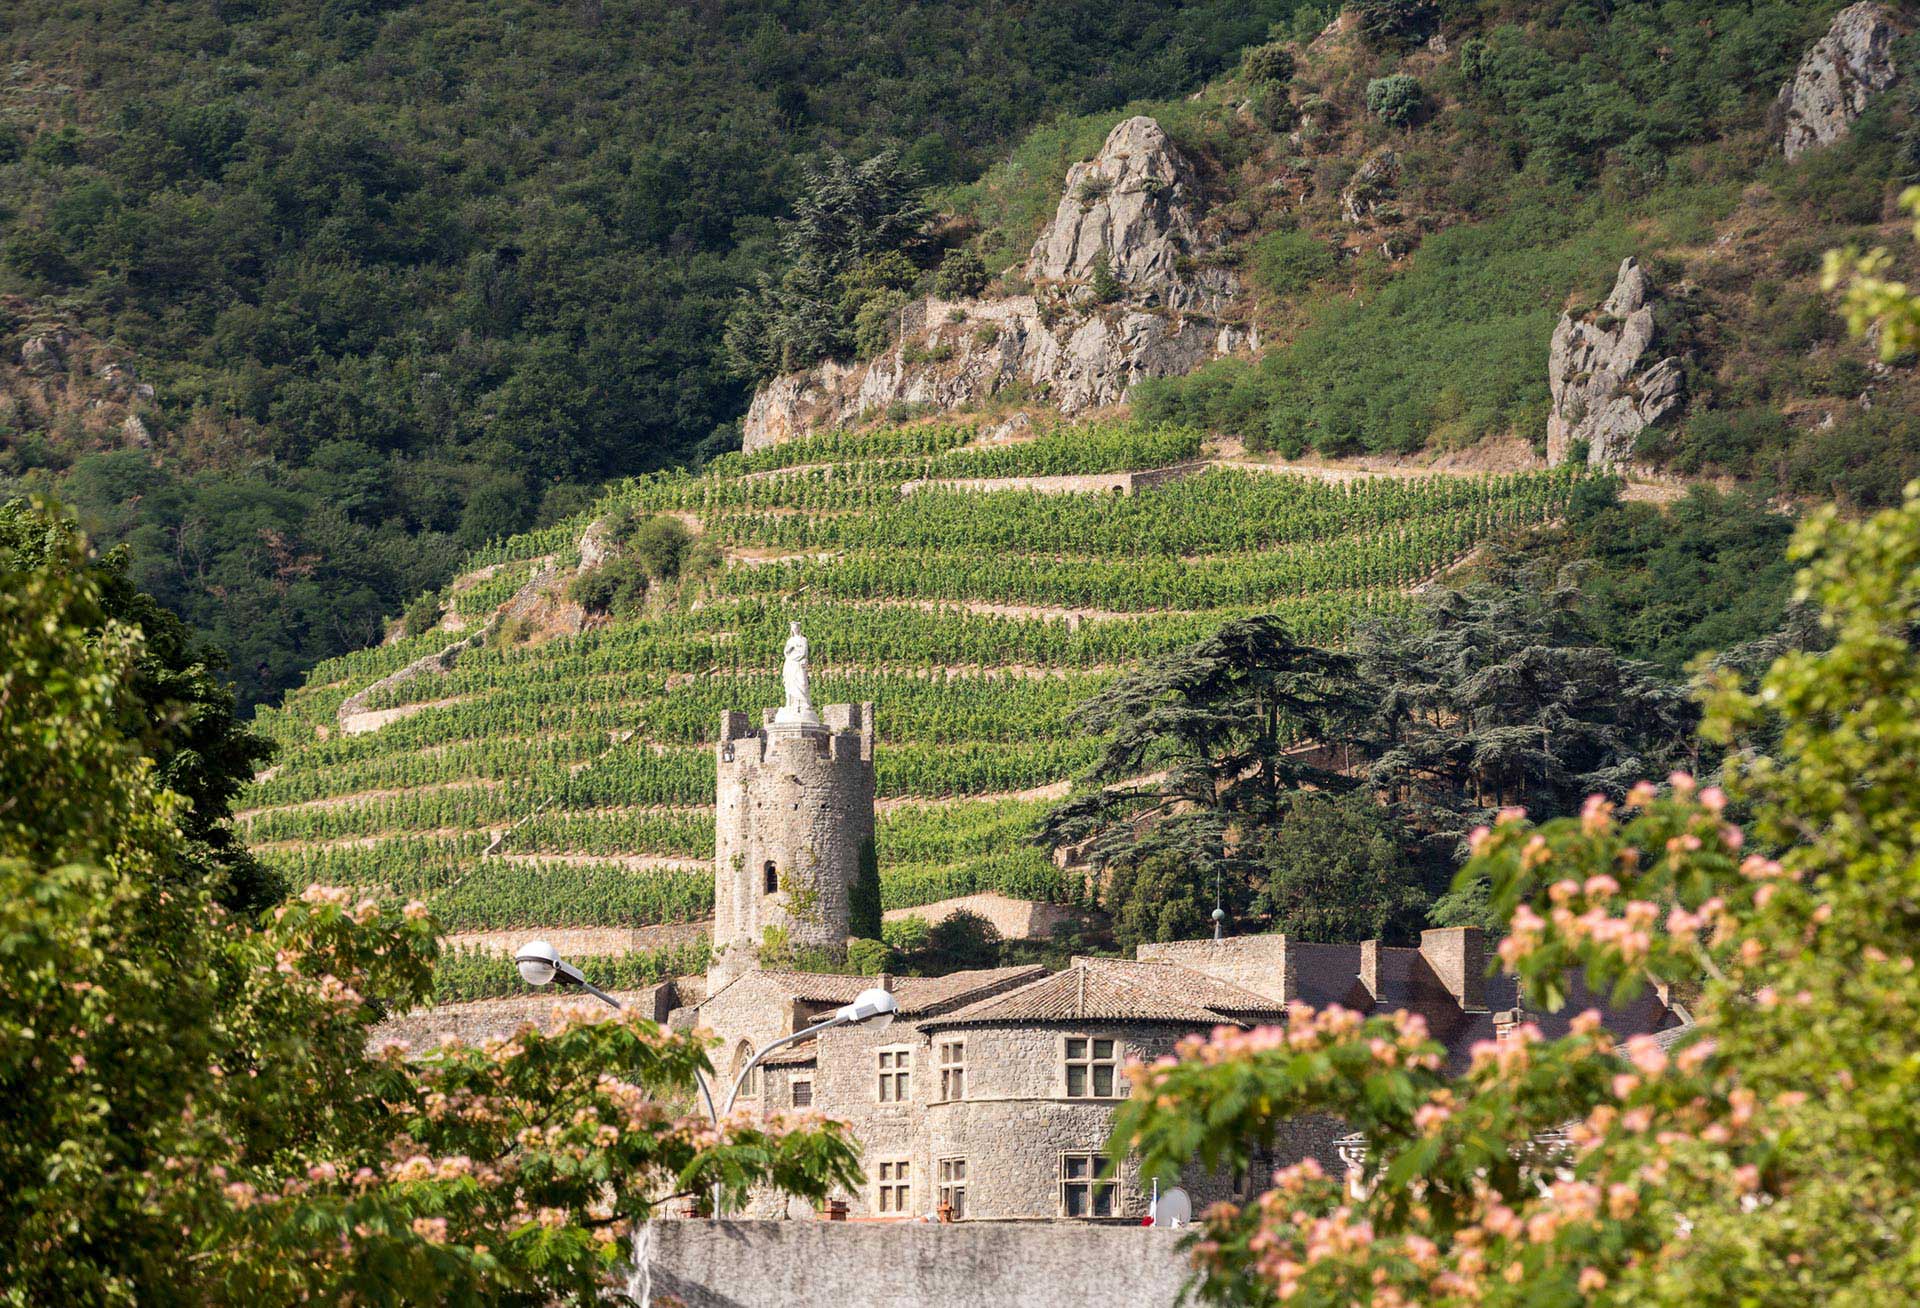 Wines of the Rhône Valley with Linda Field